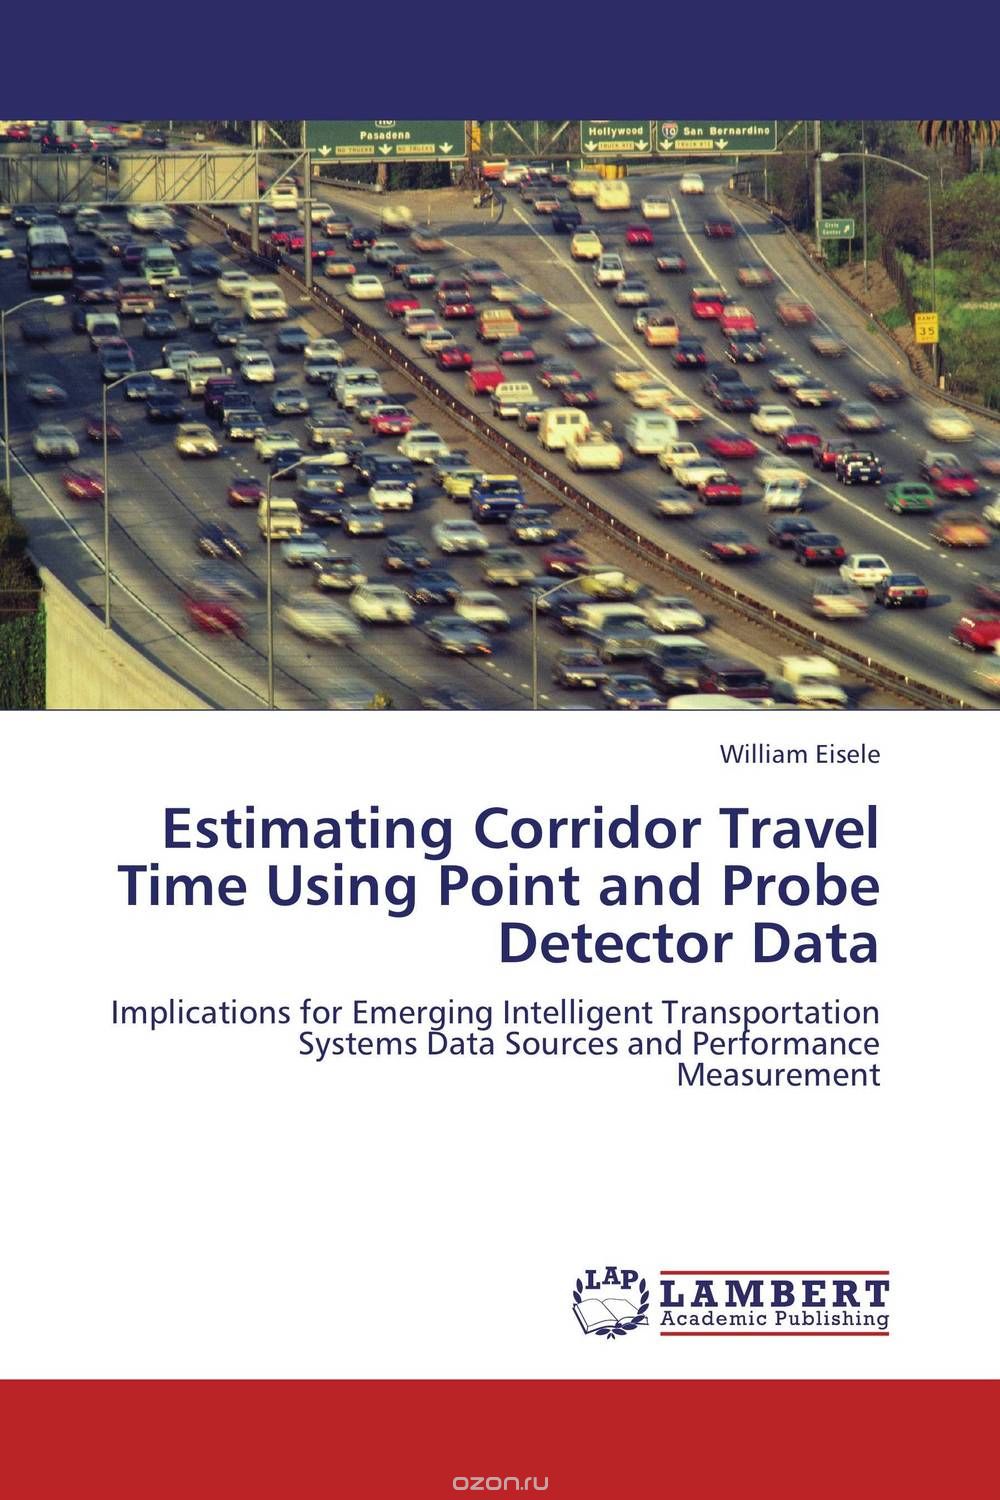 Скачать книгу "Estimating Corridor Travel Time Using Point and Probe Detector Data"